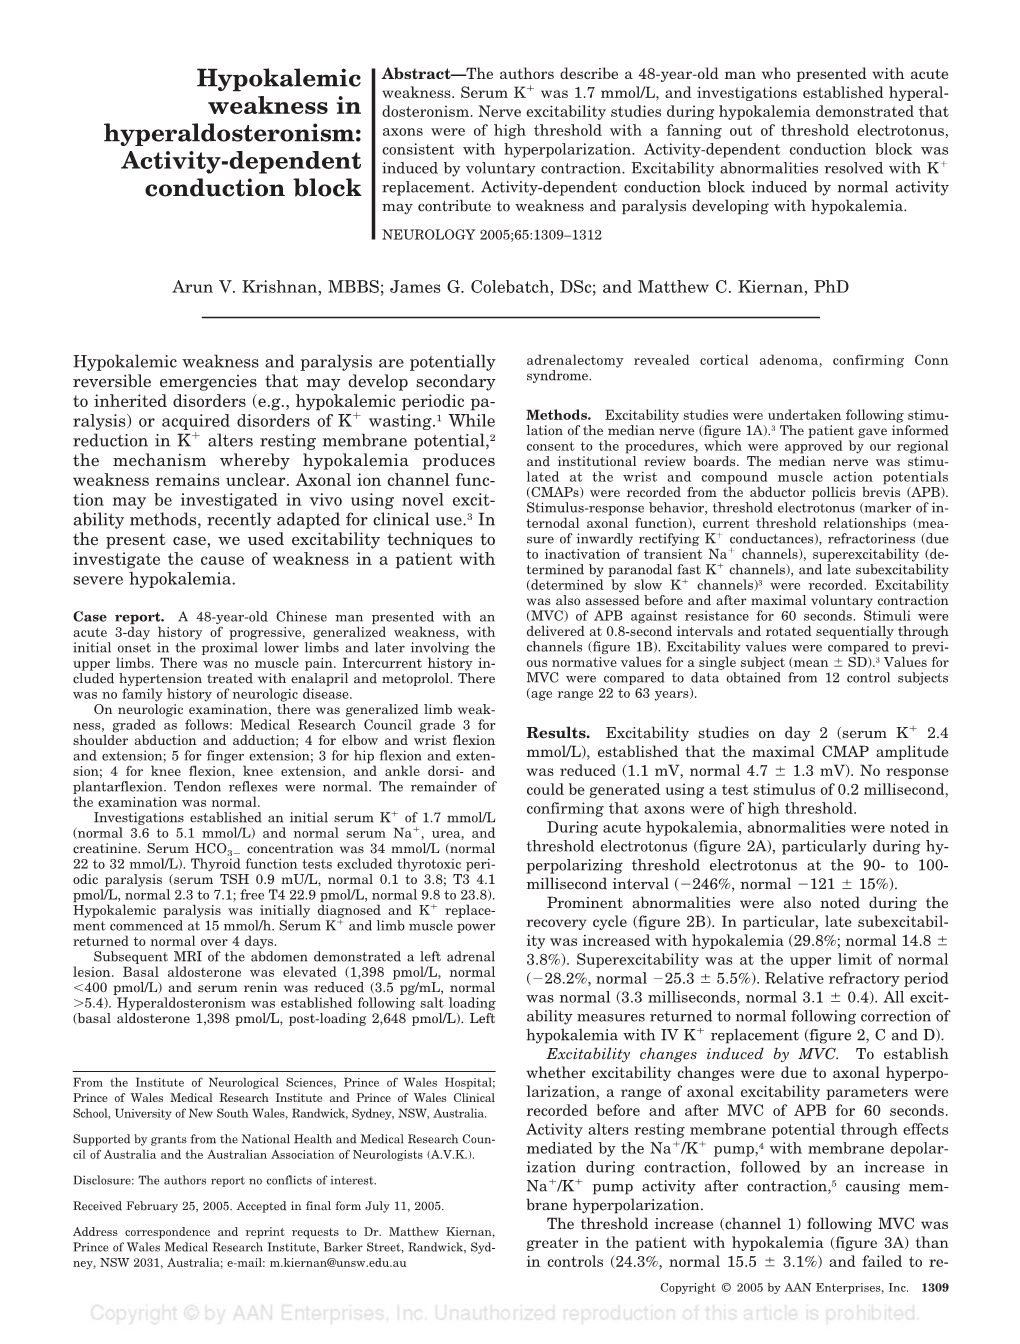 Hypokalemic Weakness in Hyperaldosteronism: Activity-Dependent Conduction Block